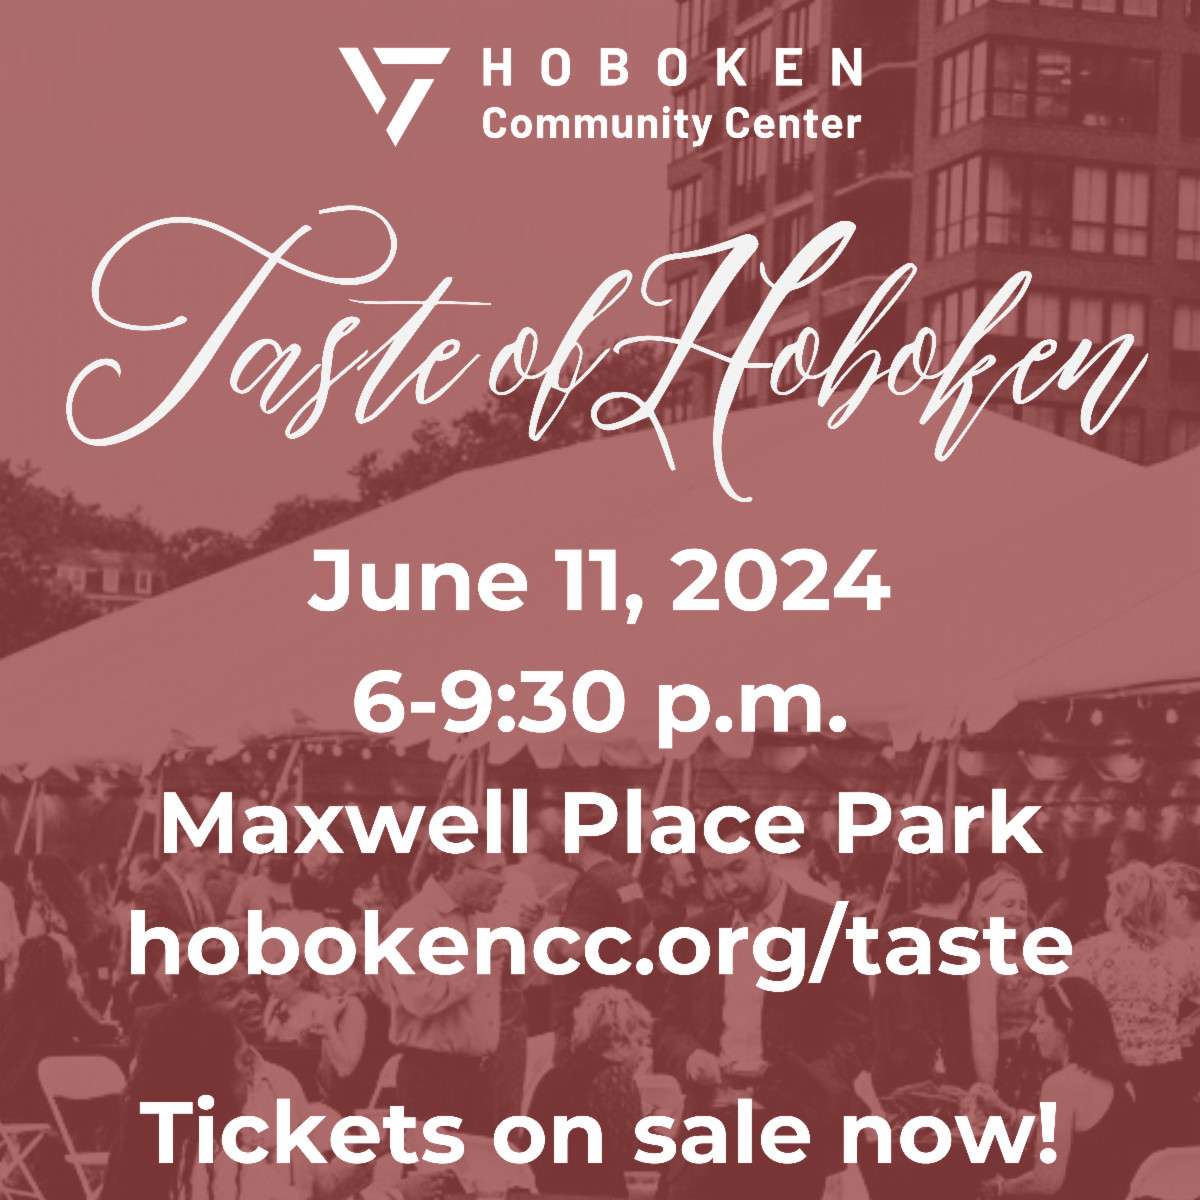 hobken community center flyer taste of hoboken photo credit